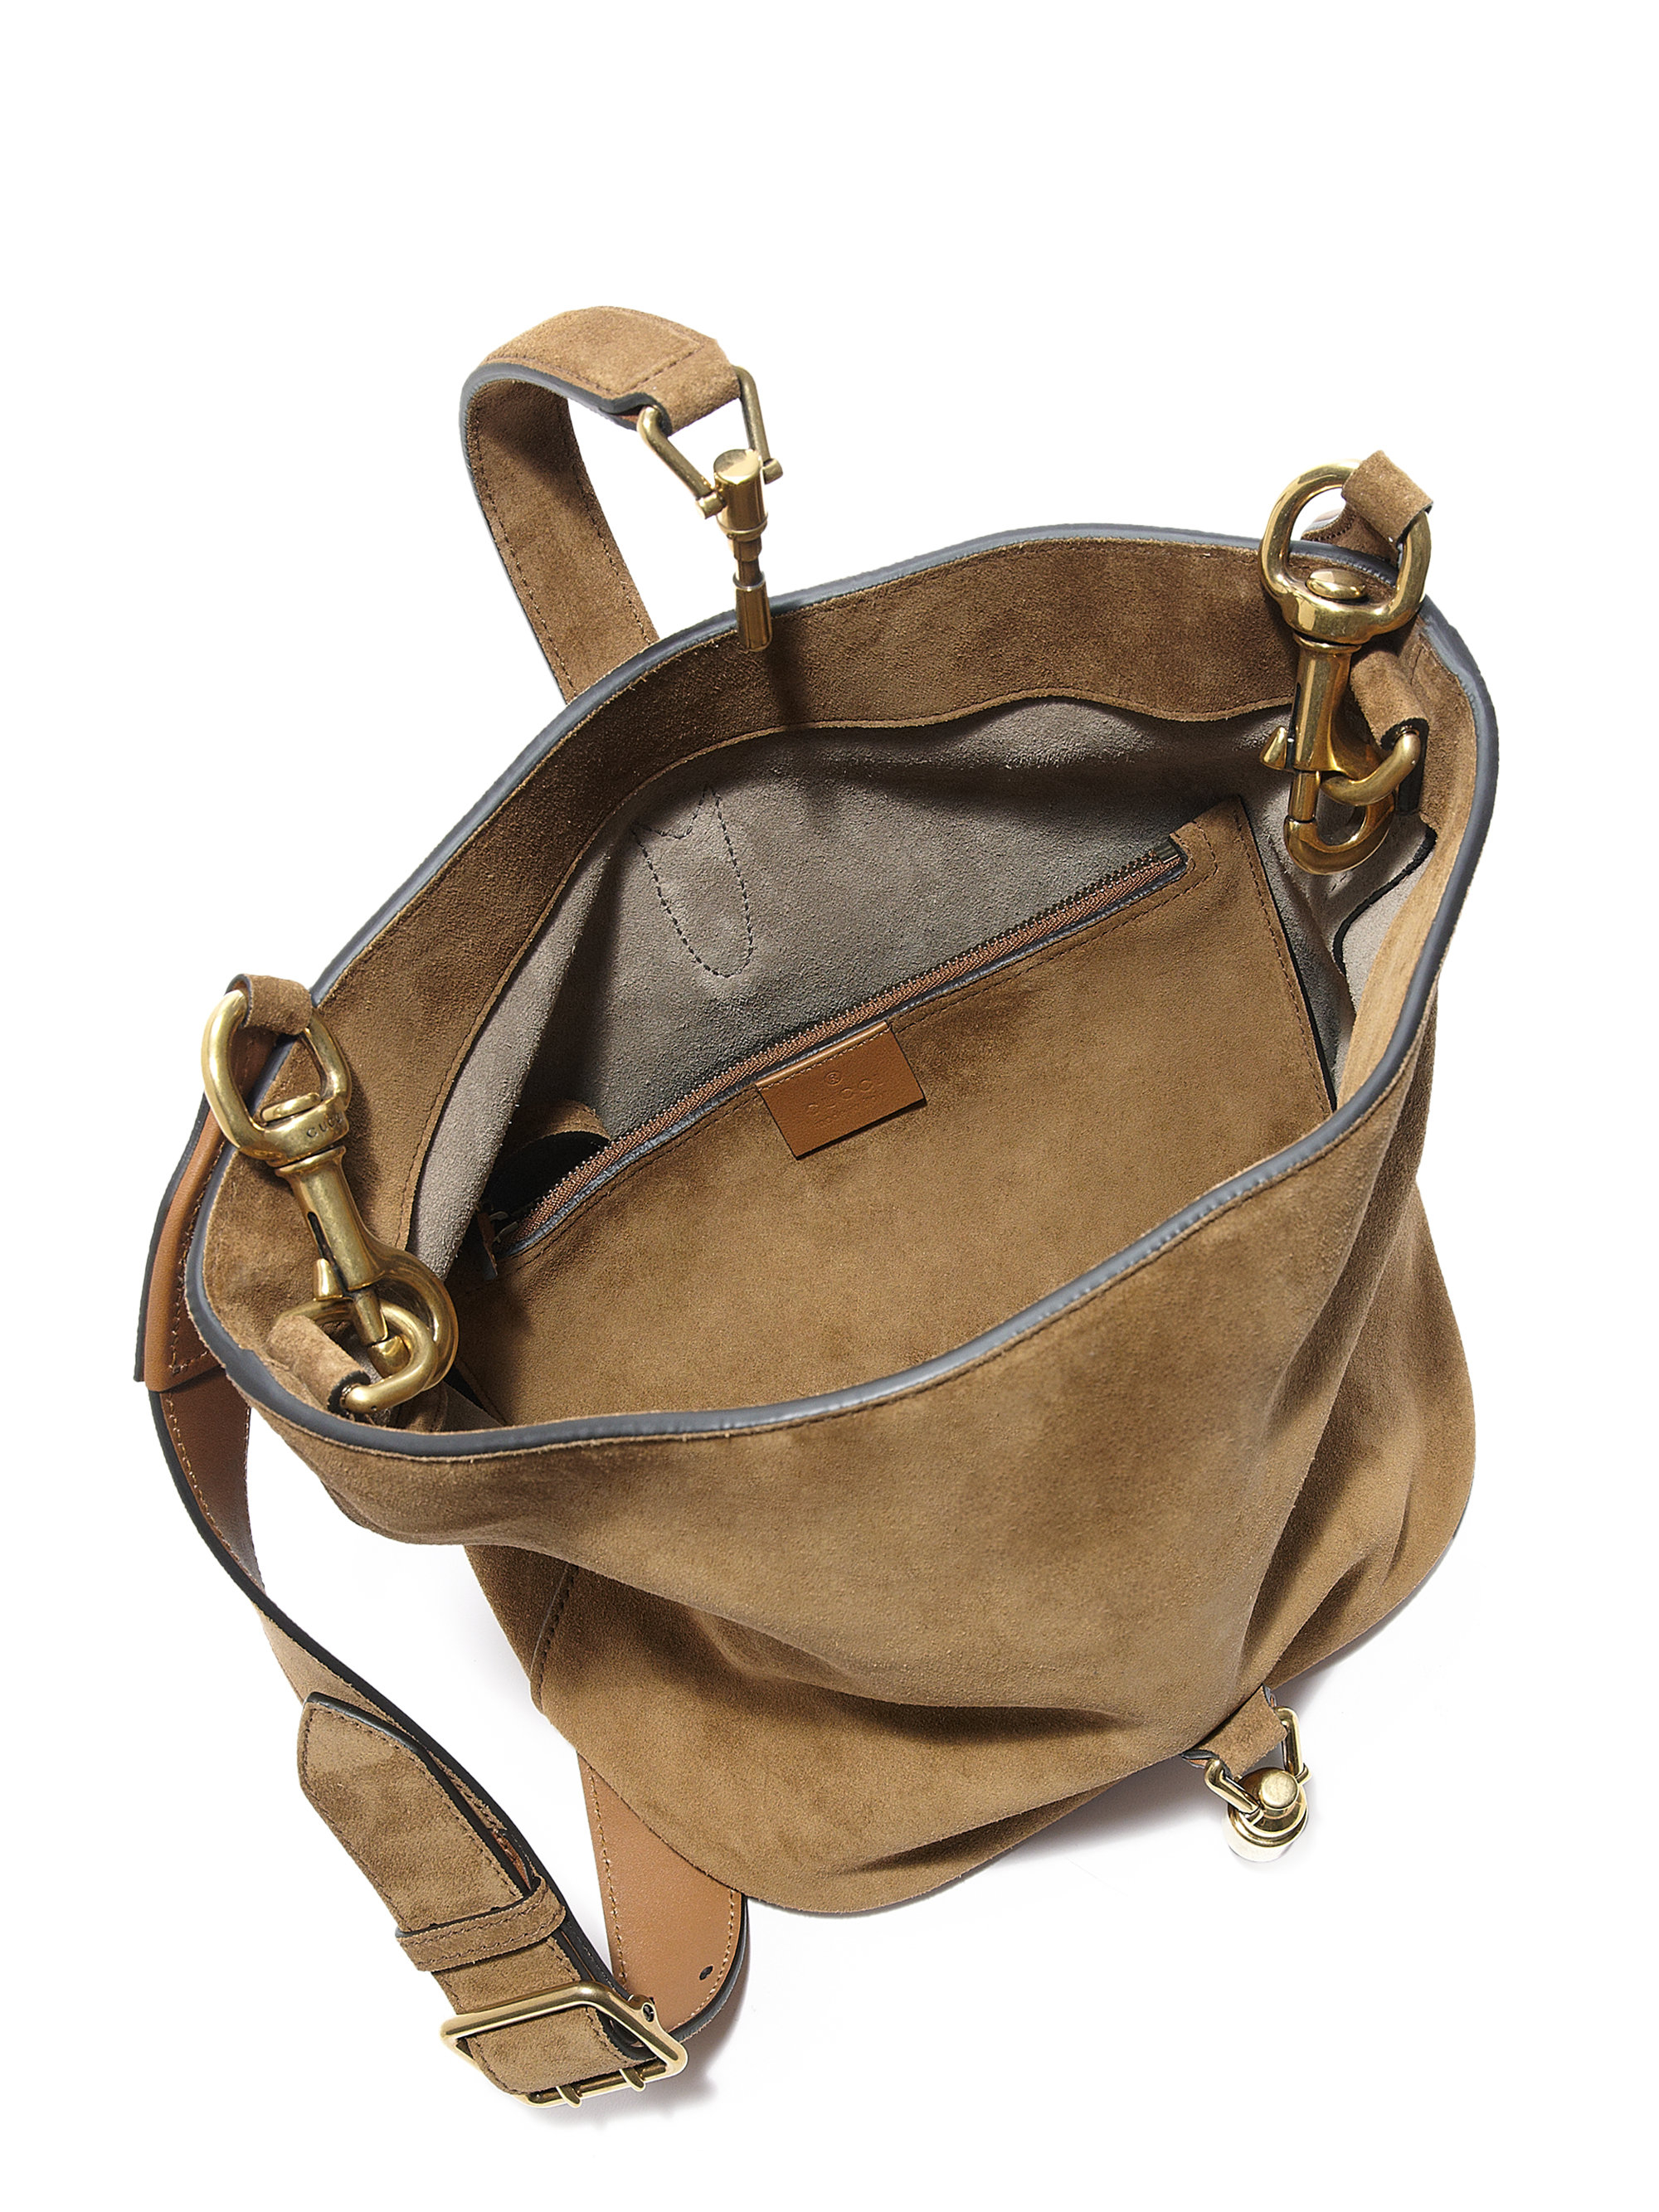 Lyst - Gucci Jackie Soft Suede Bucket Bag in Brown